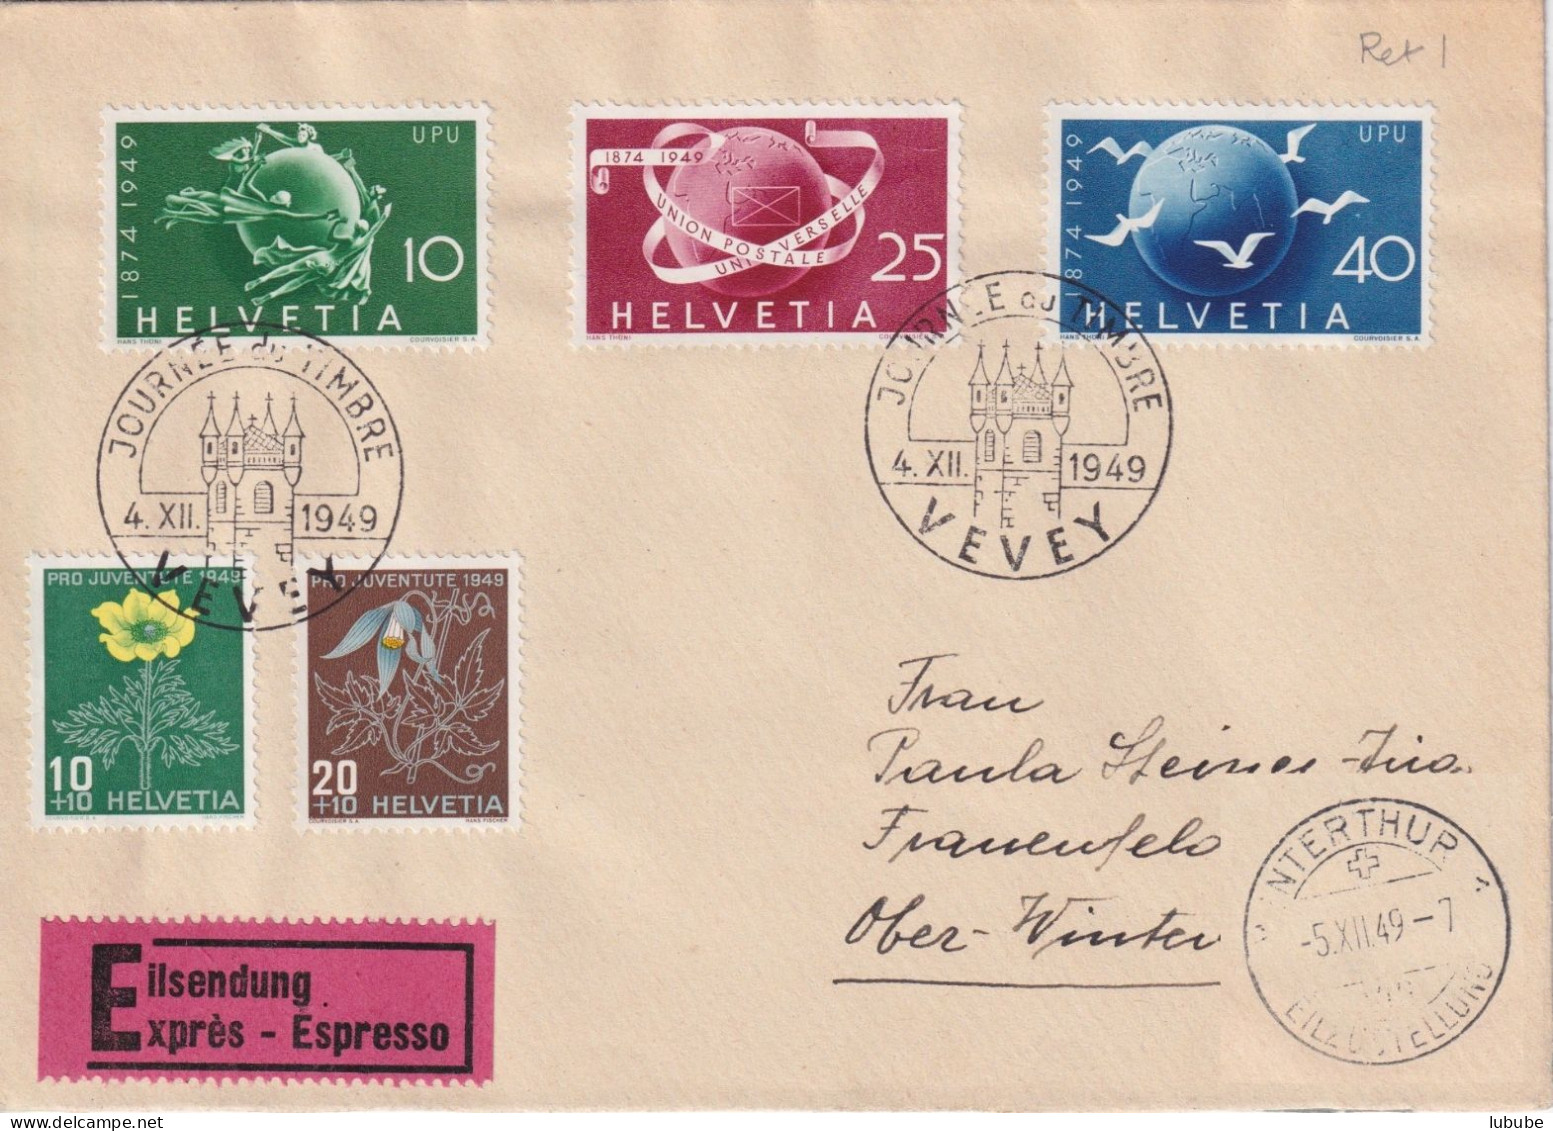 Express Brief  "Journée Du Timbre Vevey" - Winterthur       1949 - Briefe U. Dokumente